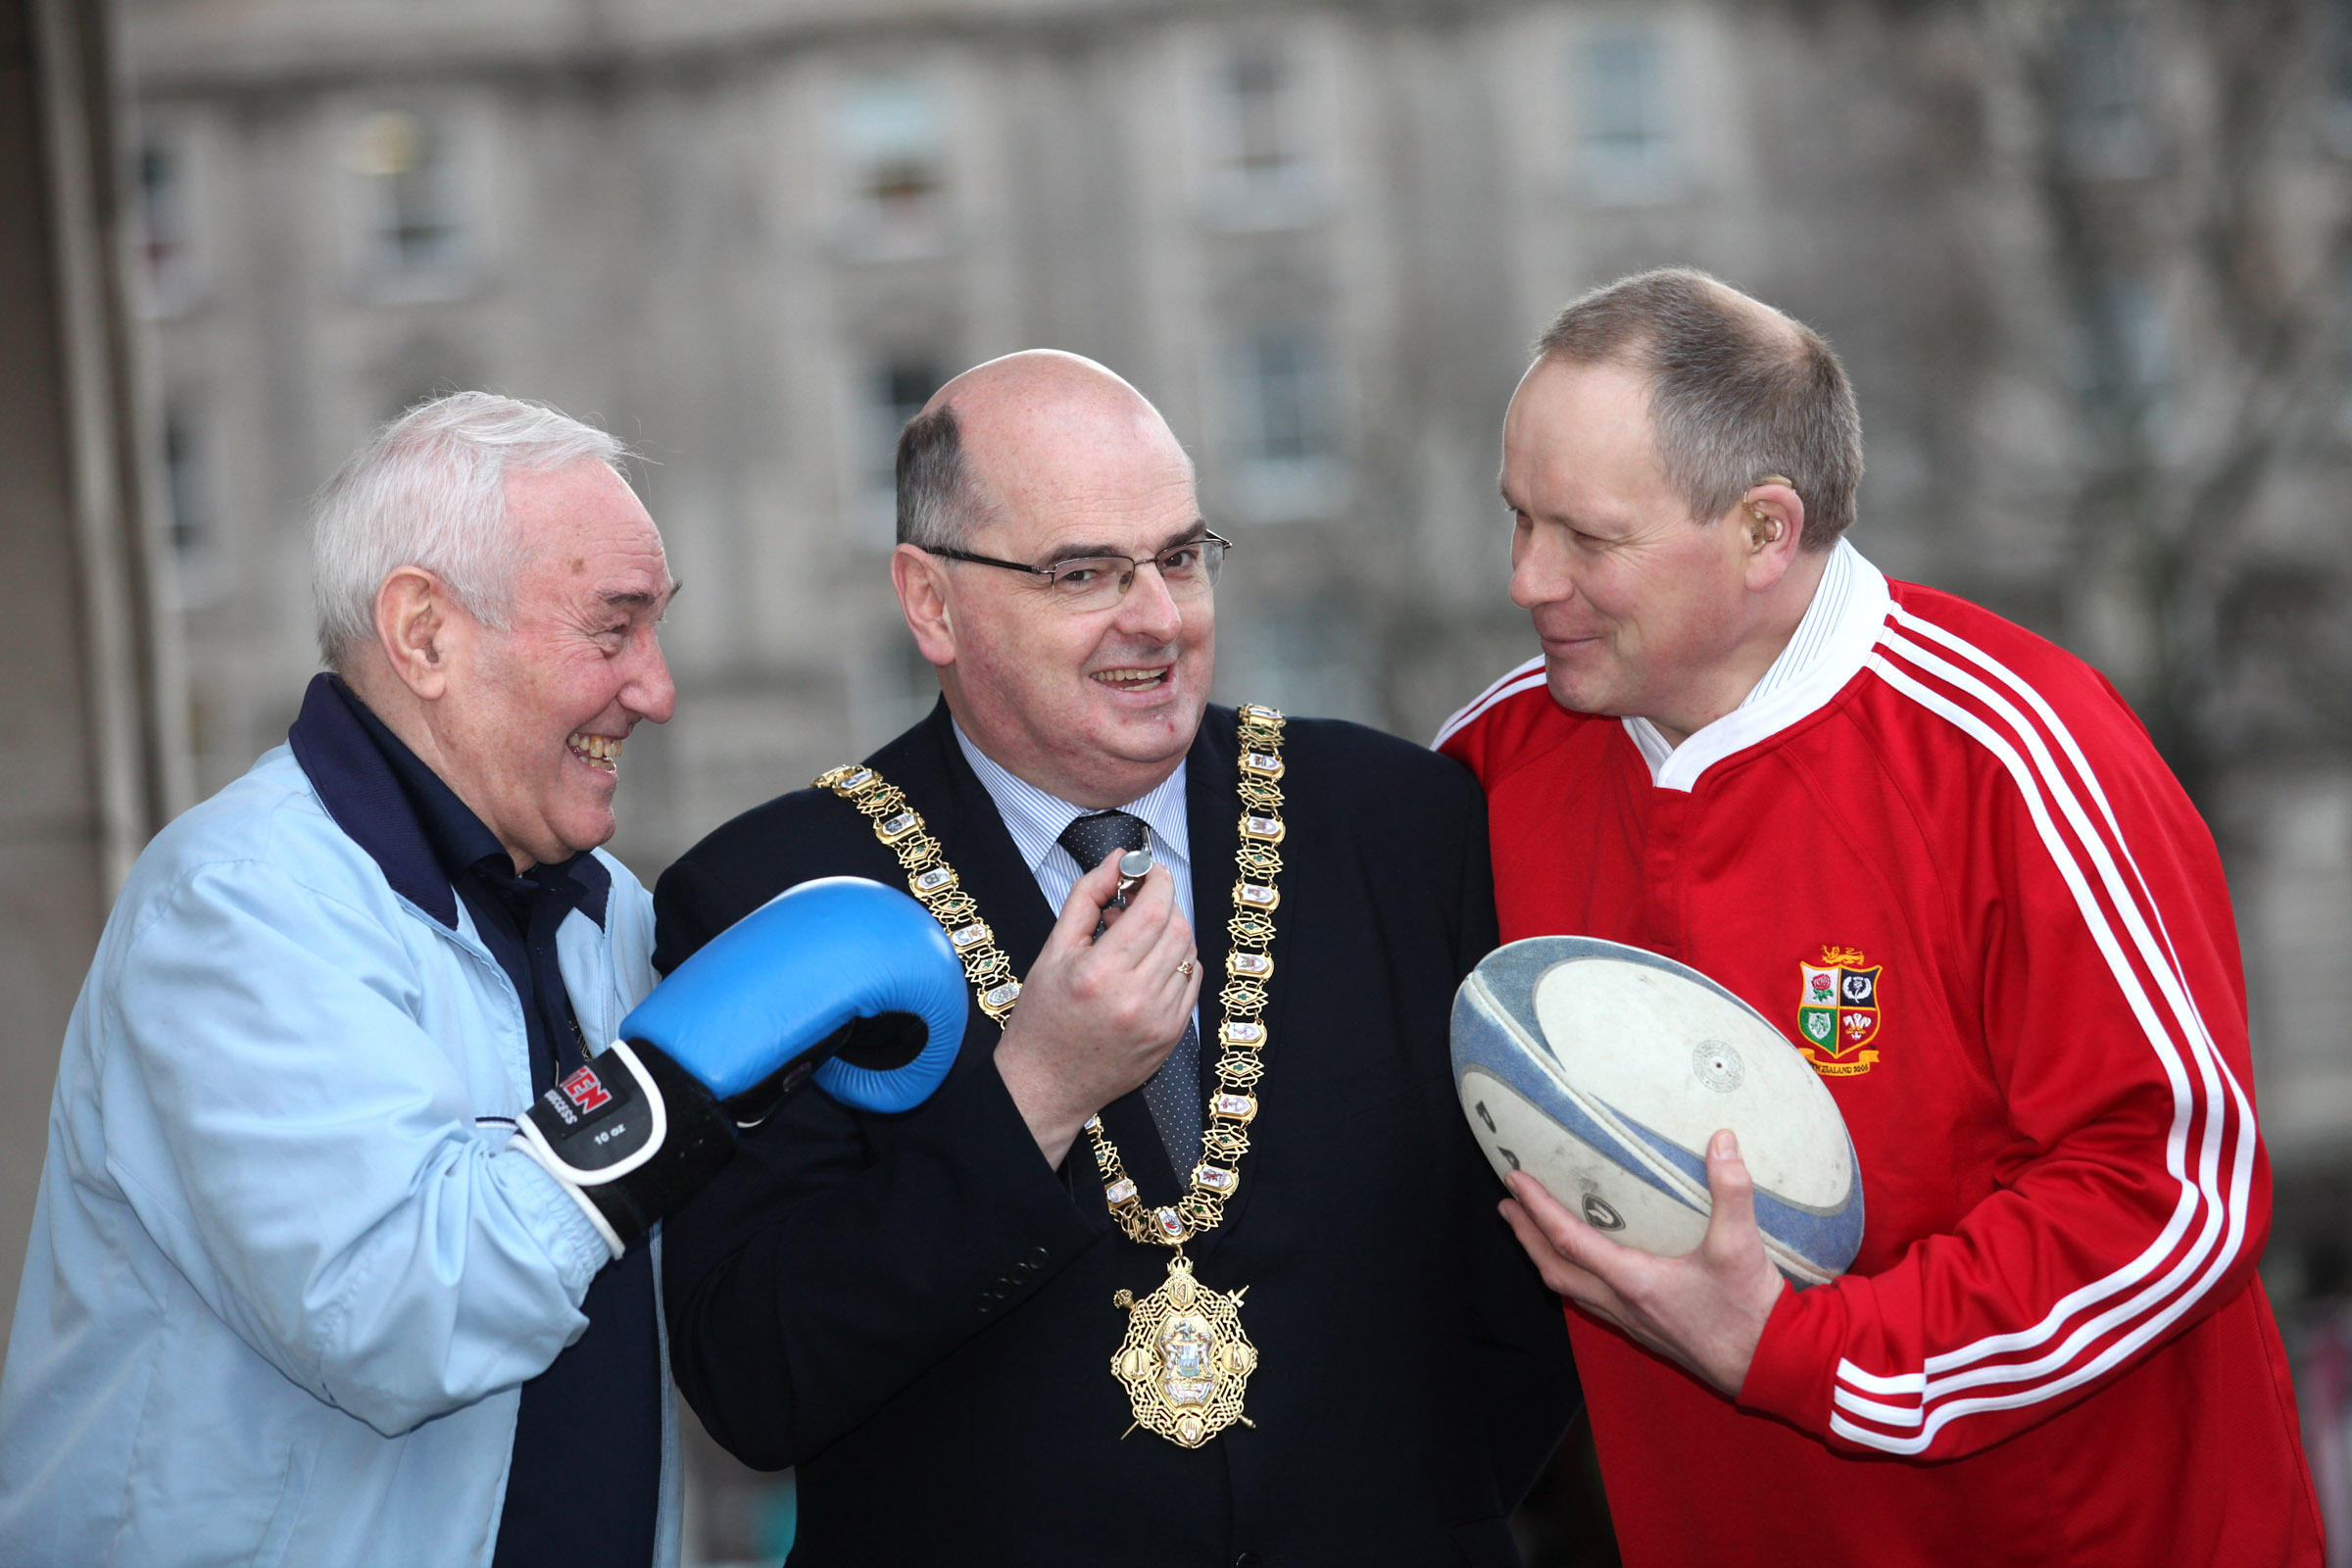 Belfast legends promote positive power of sport